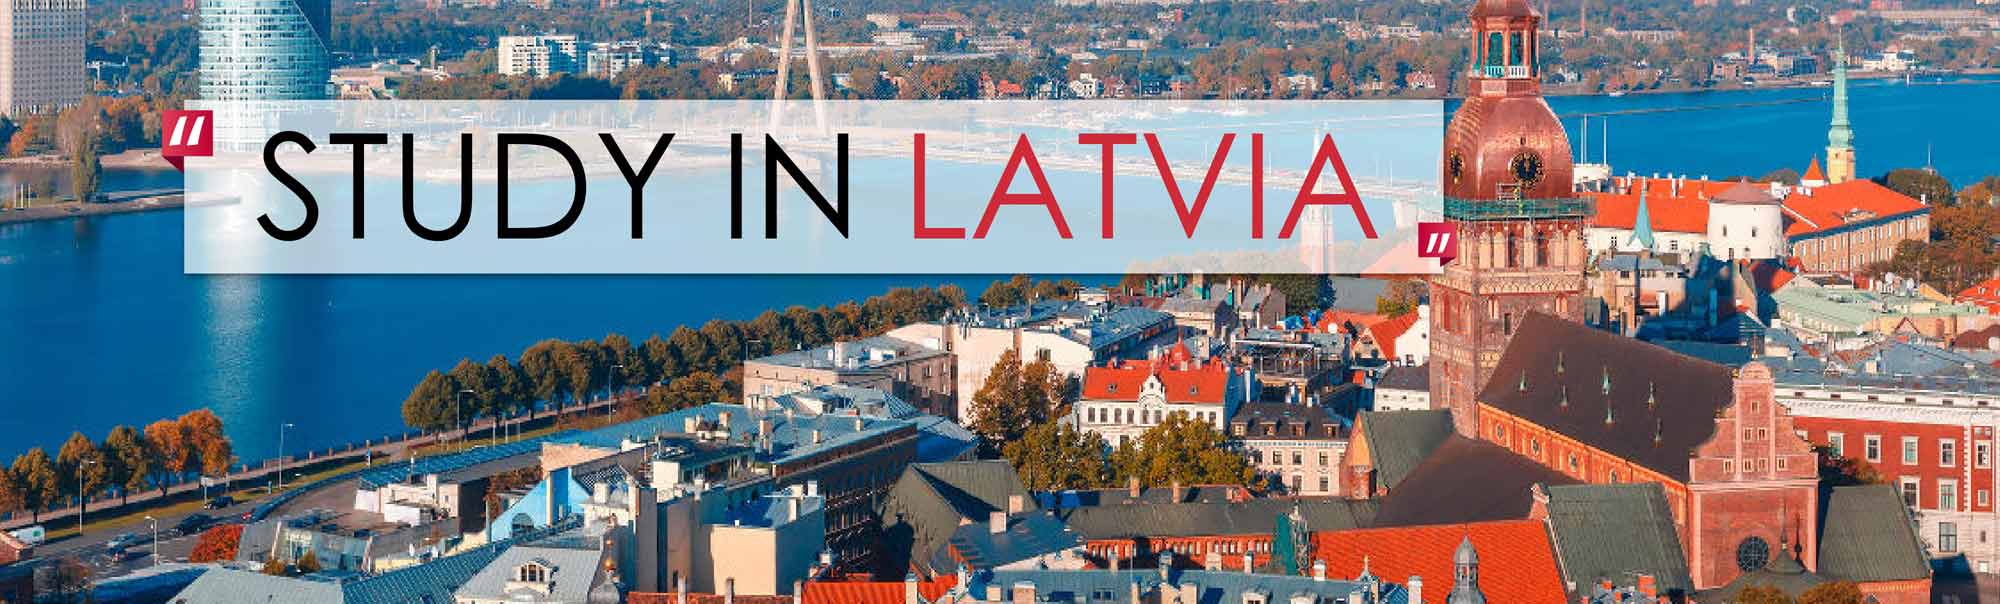 study in Latvia